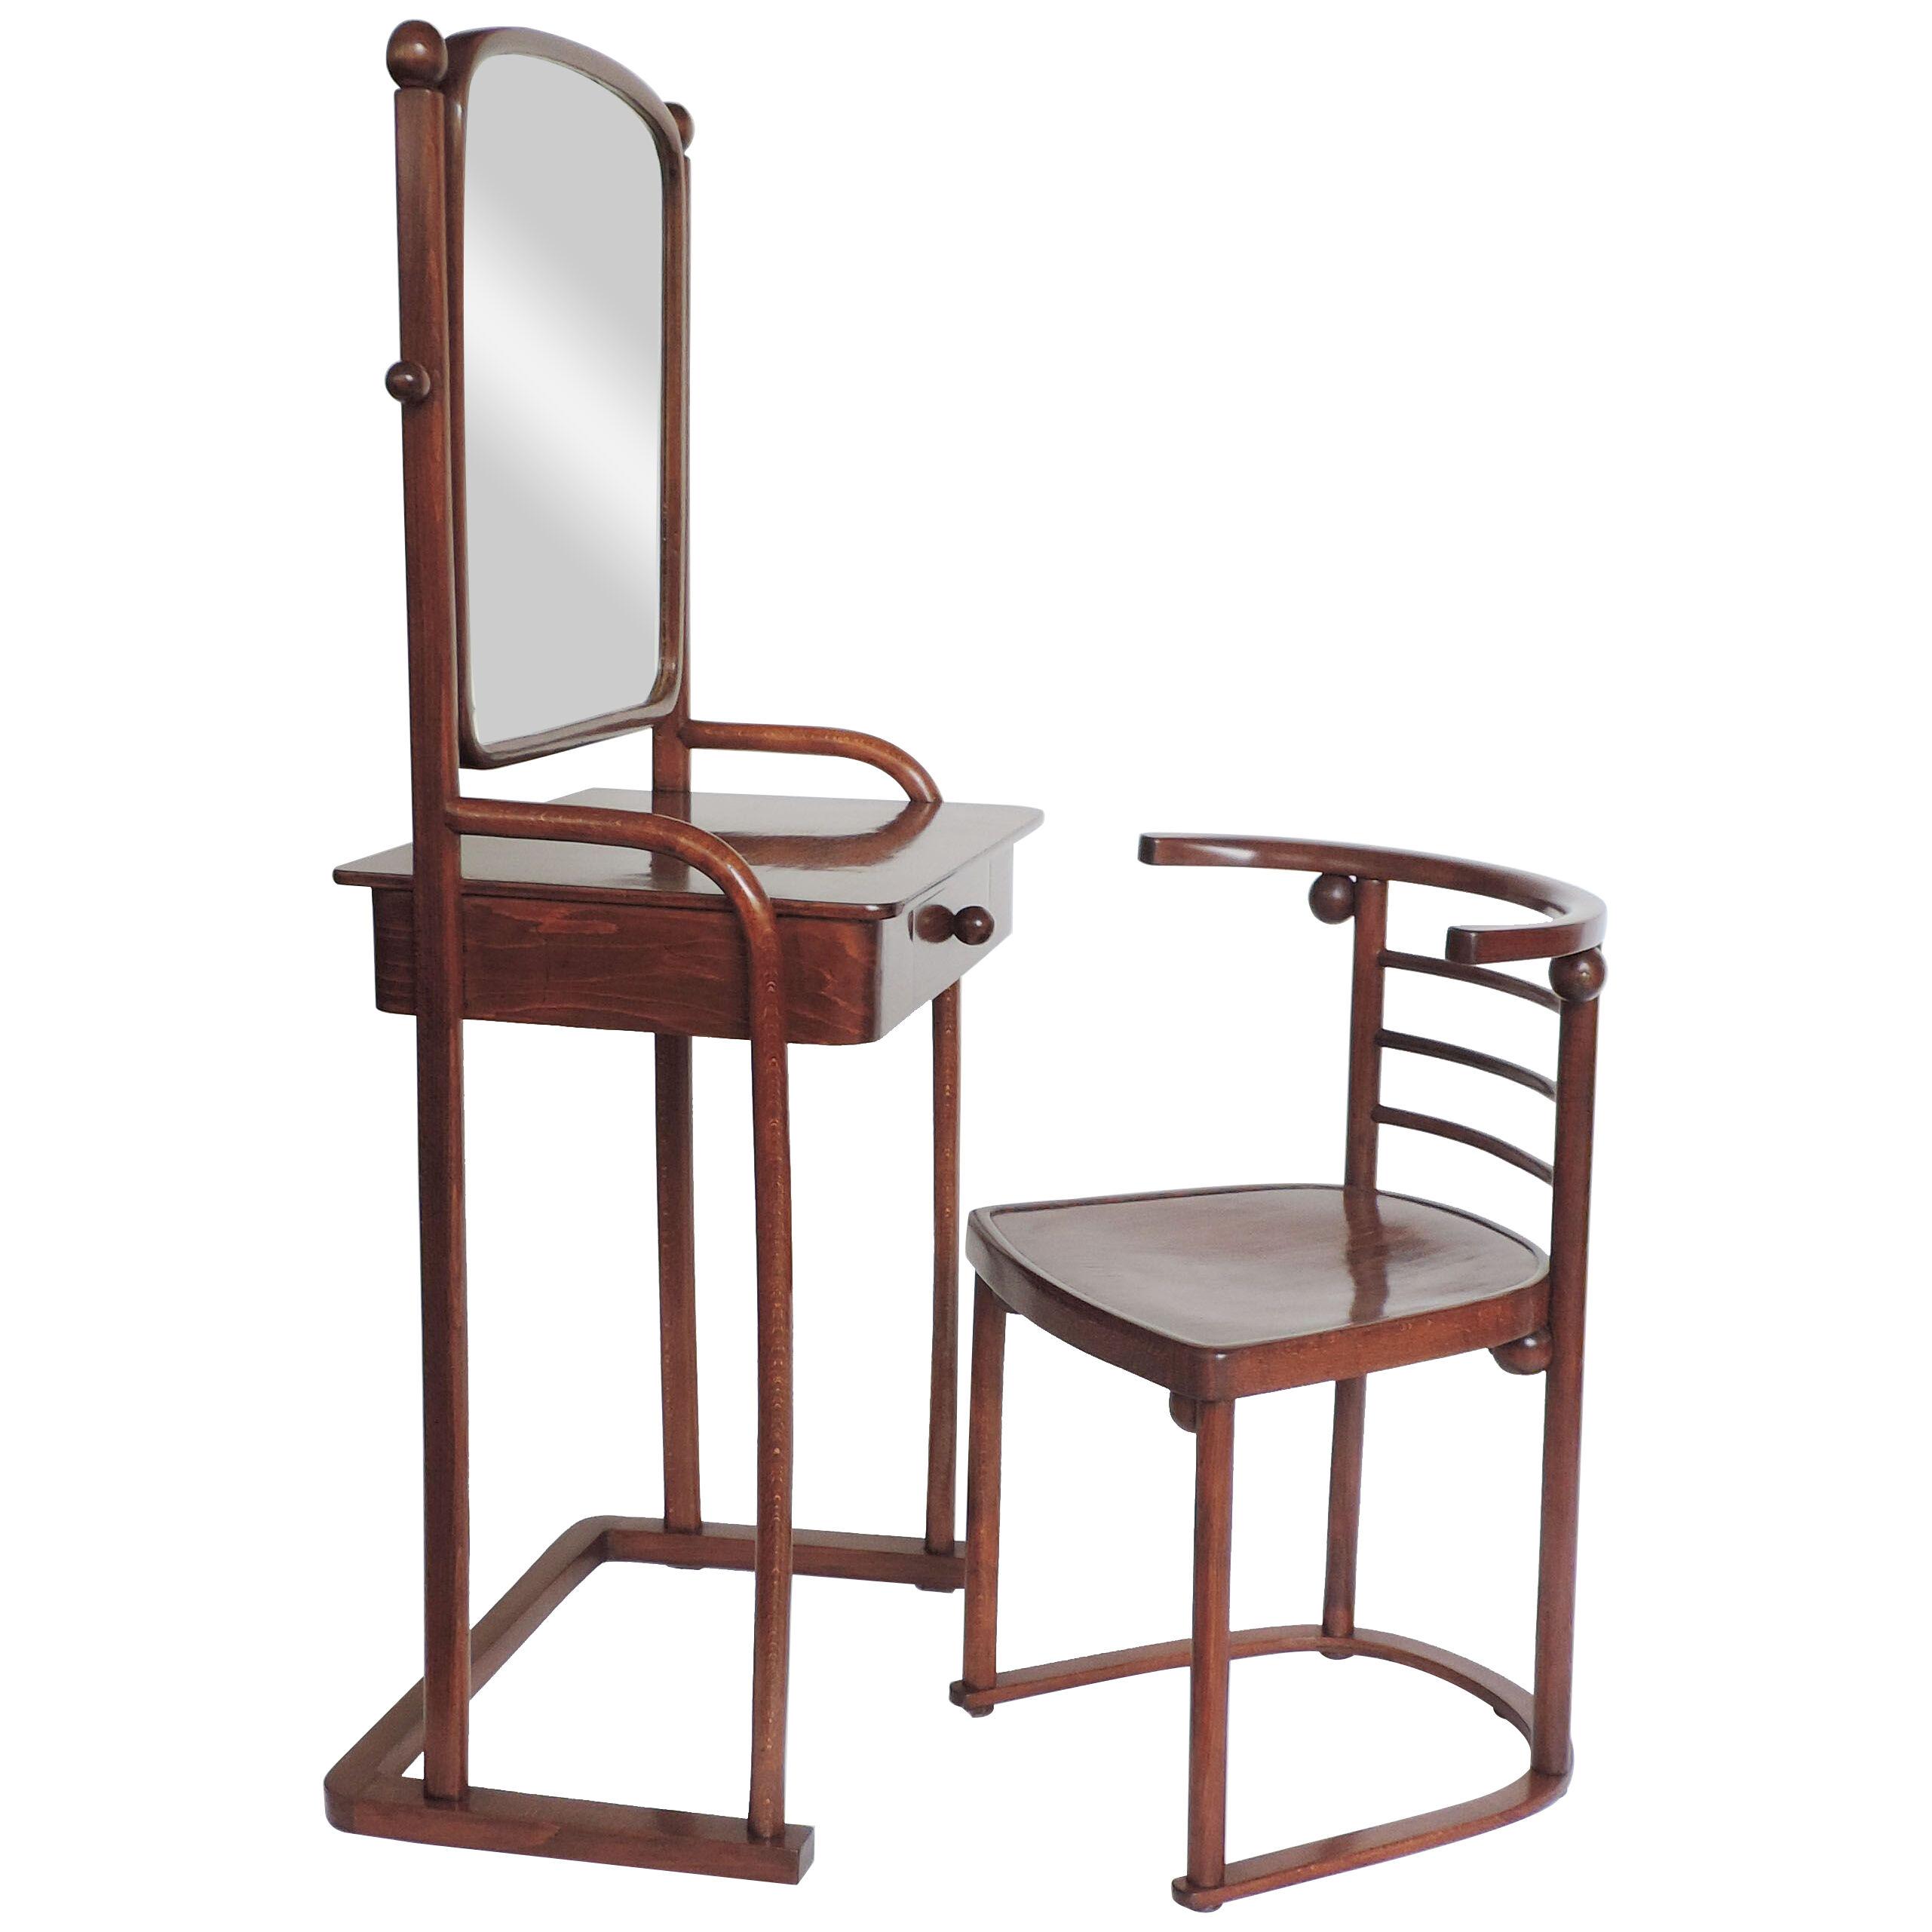 Josef Hoffmann "Fledermaus" Vanity and Chair for J & J Kohn, Austria, 1905